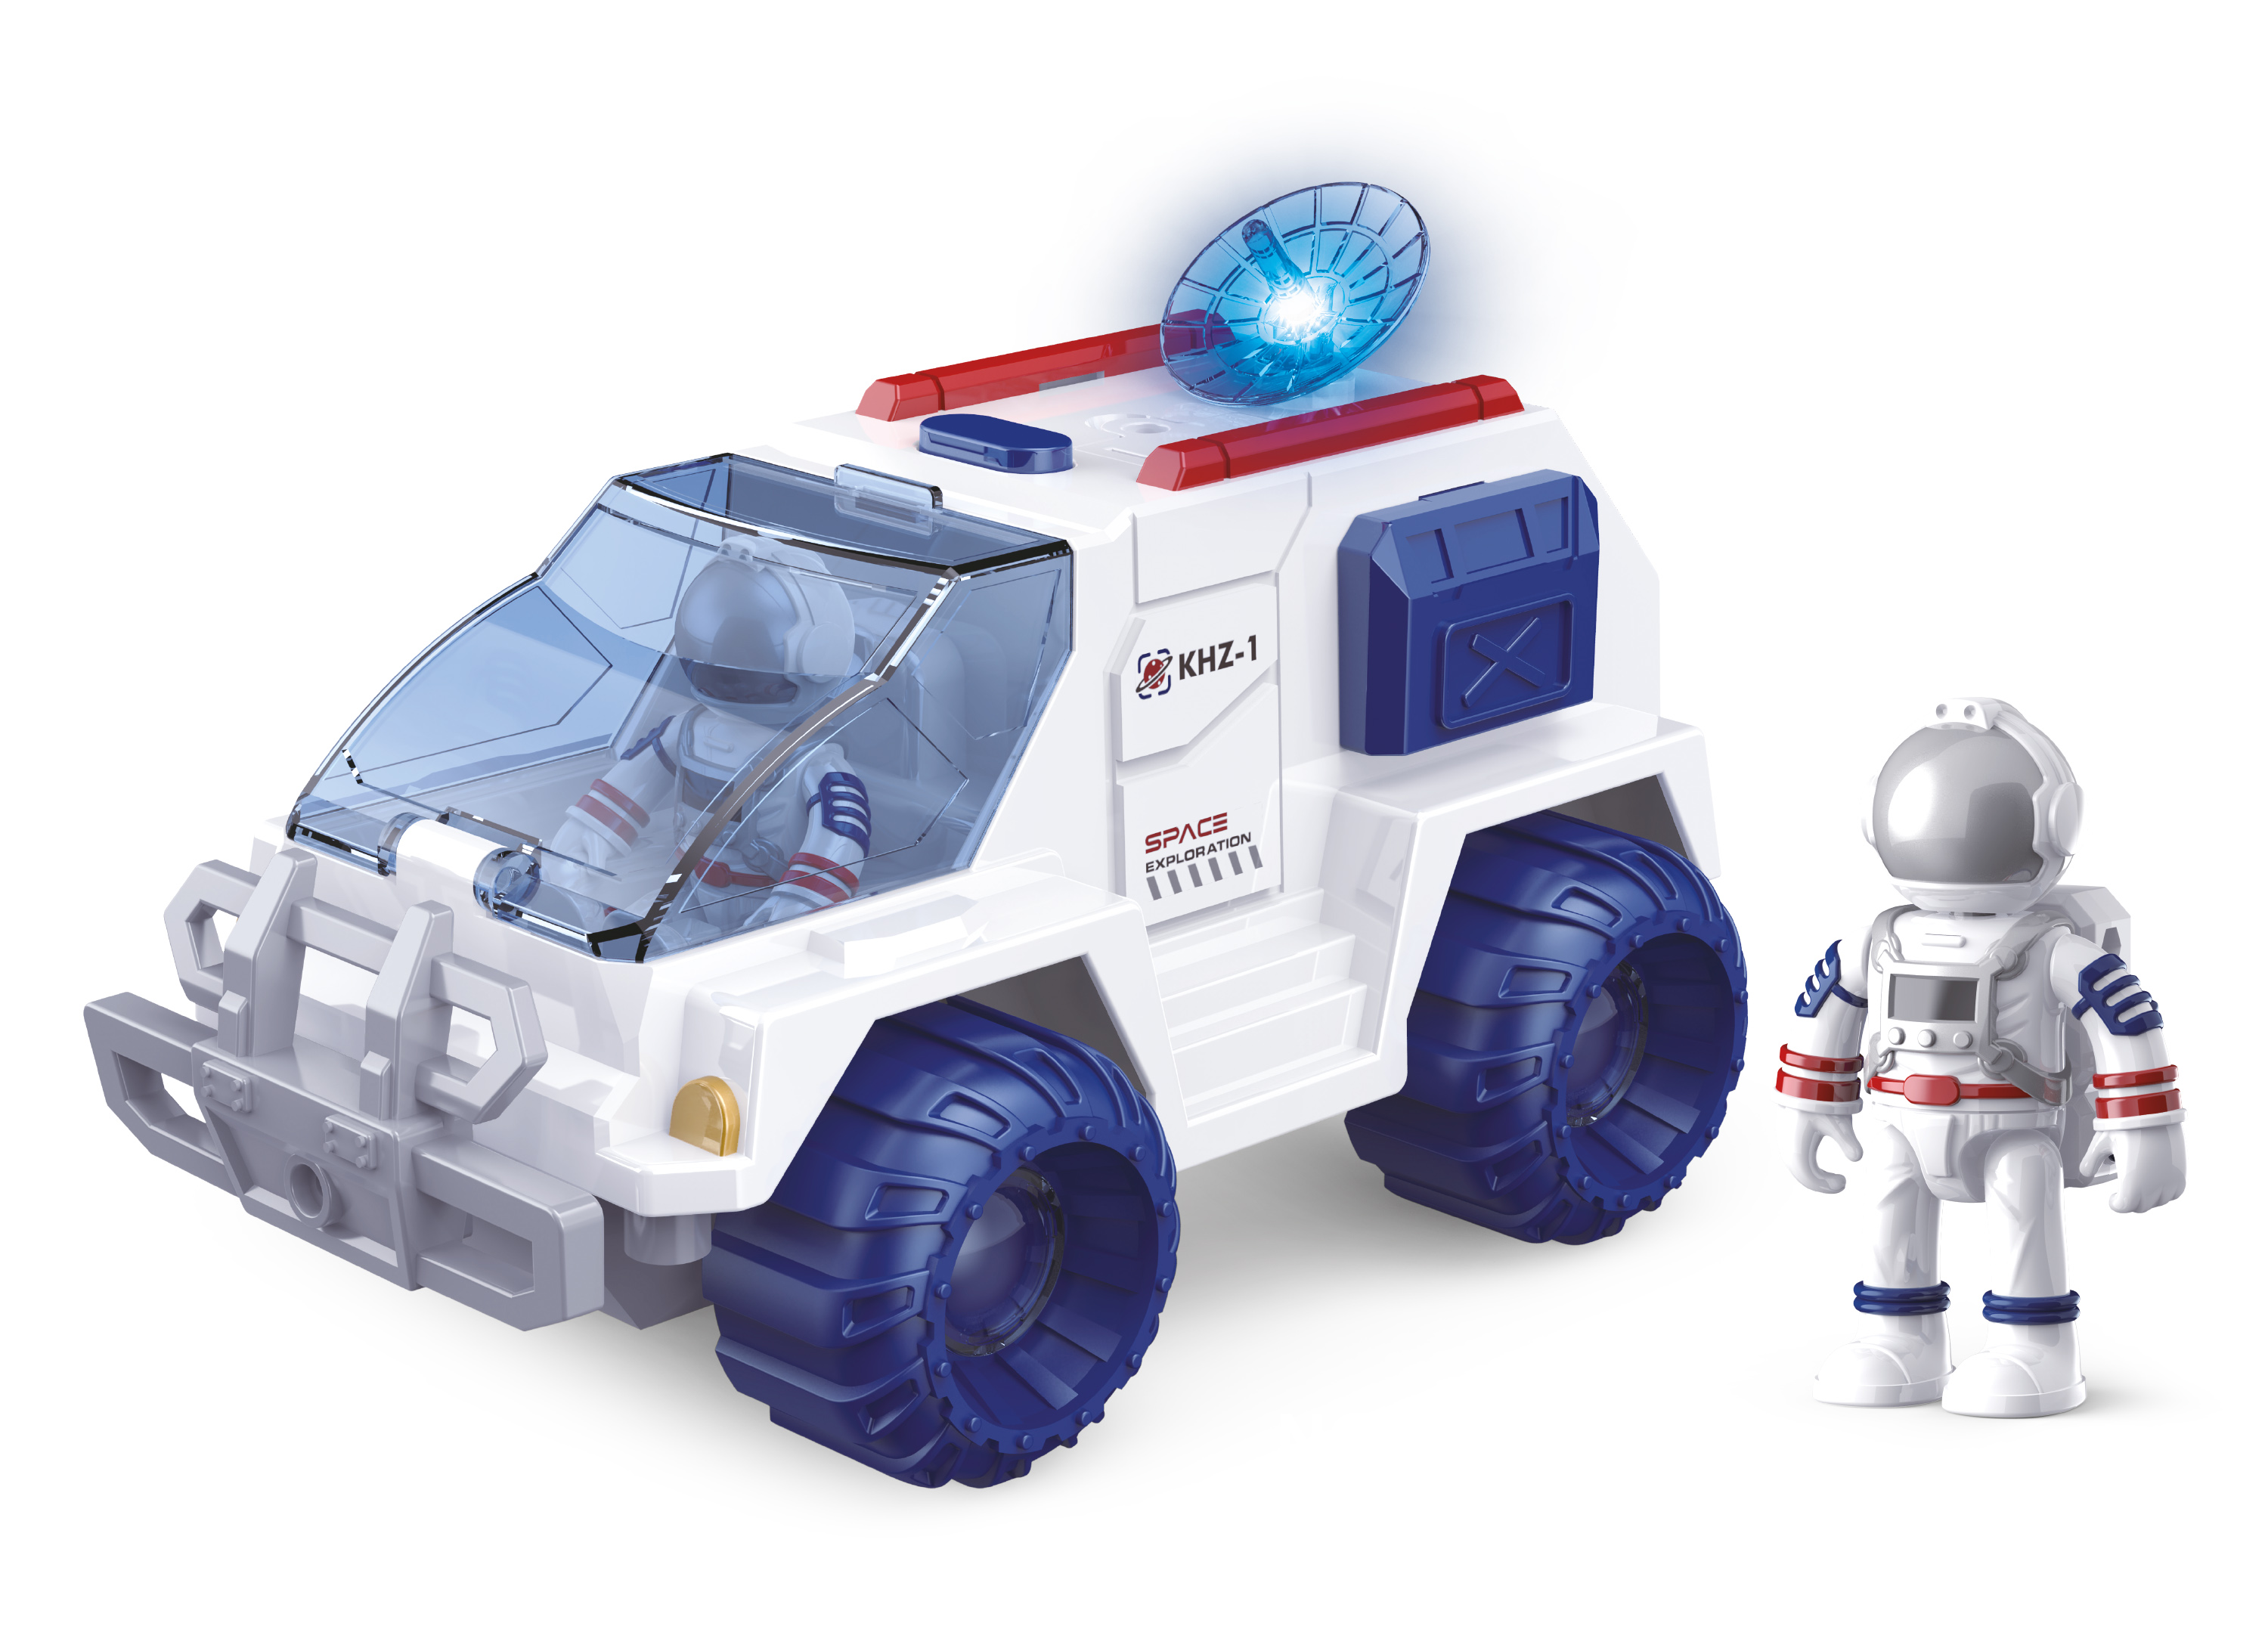 Vesmírné vozidlo s kosmonautem a efekty 17 cm